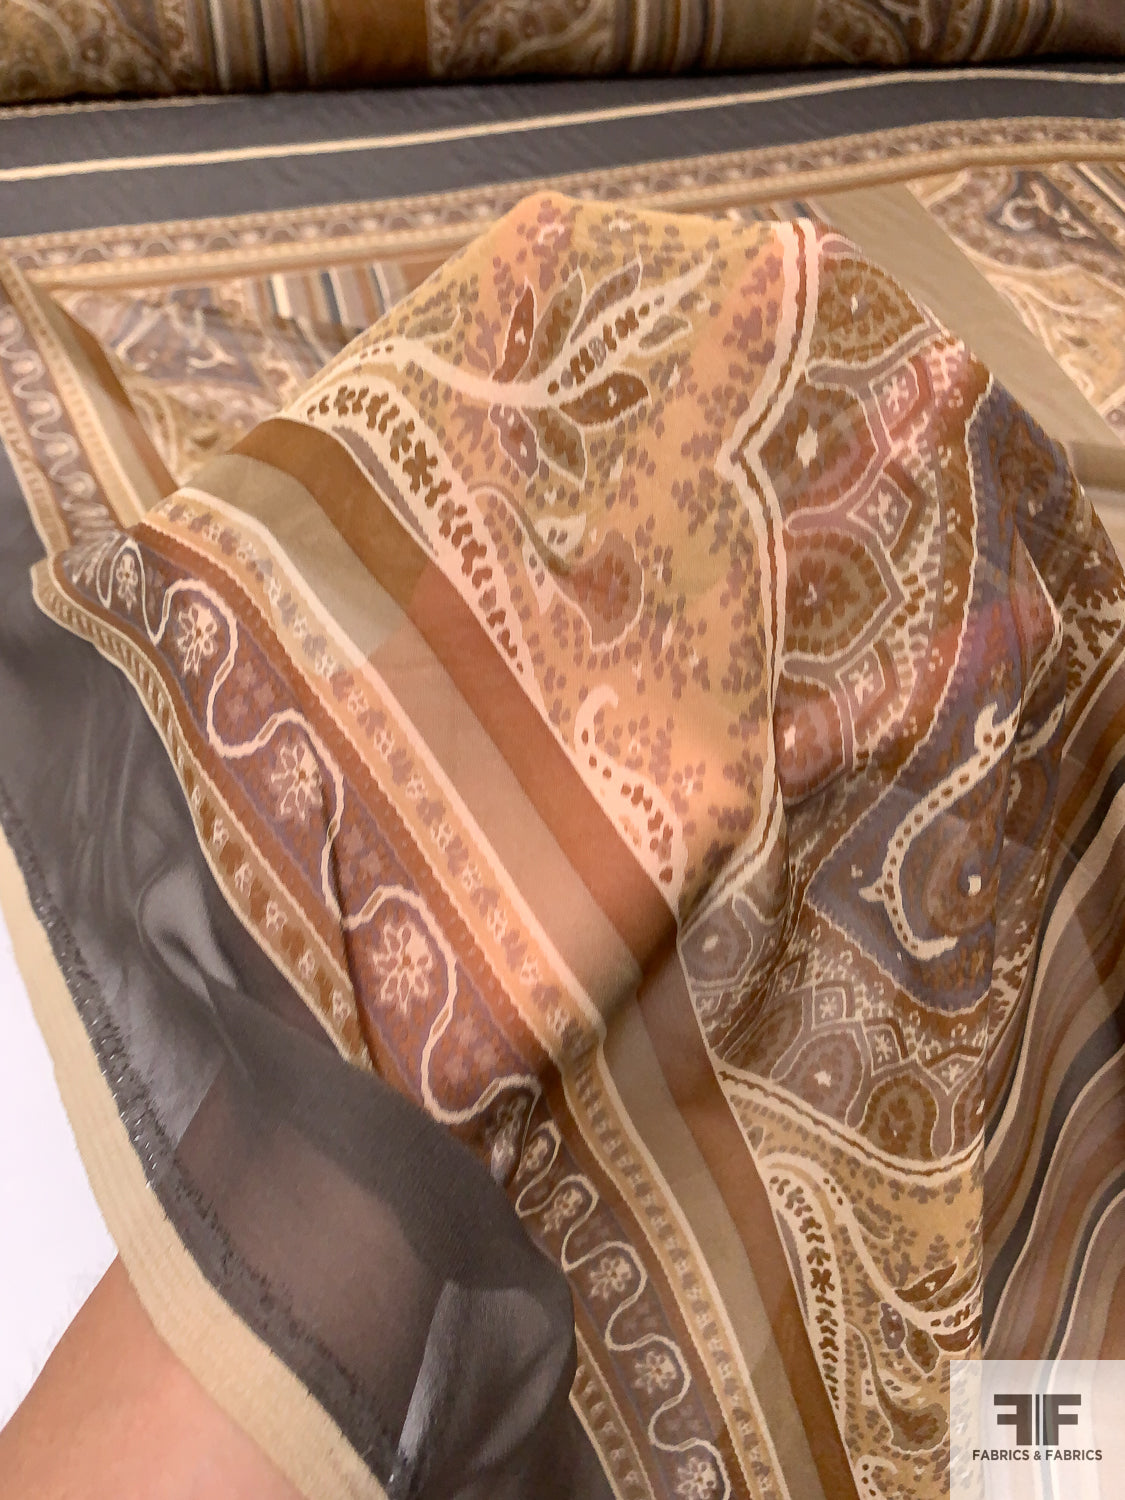 Paisley Frames Printed Crinkled Silk Chiffon Panel - Shades of Brown / Tans